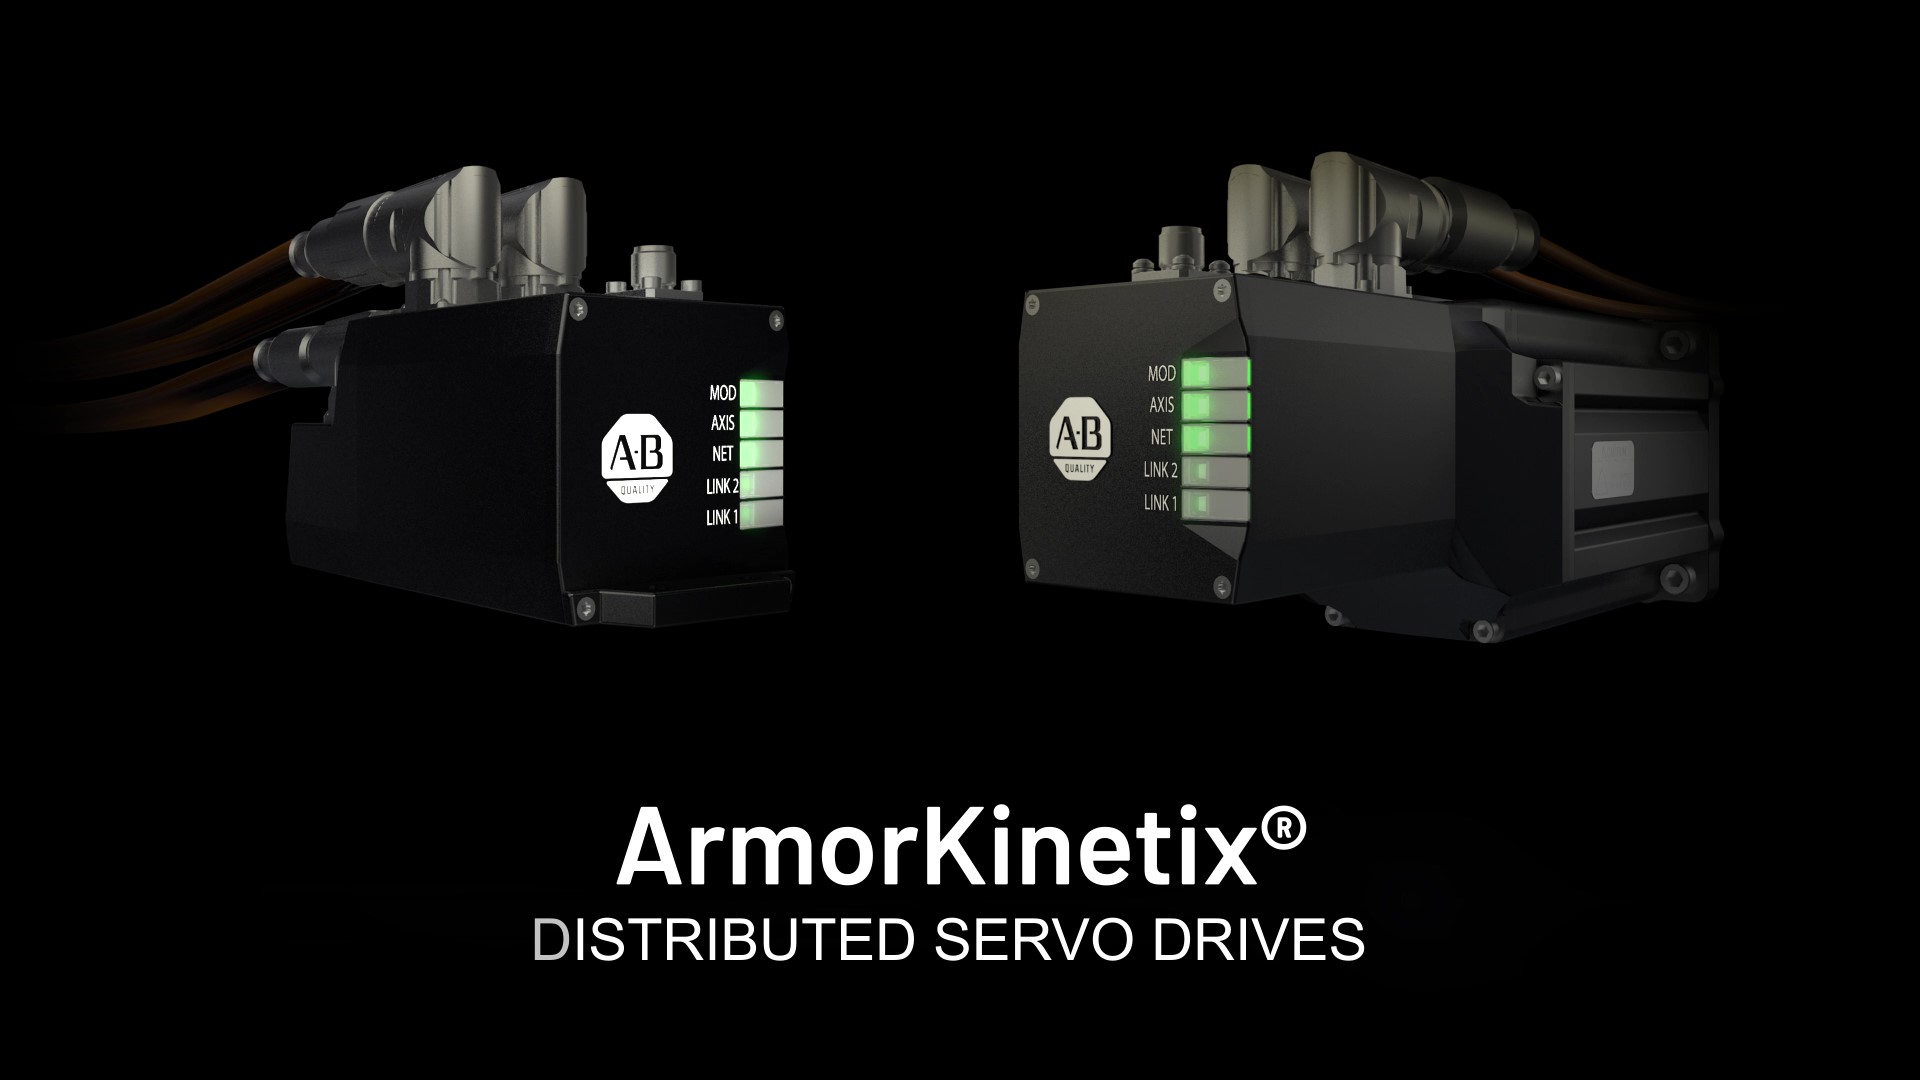 ArmorKinetix Distributed Servo Drives